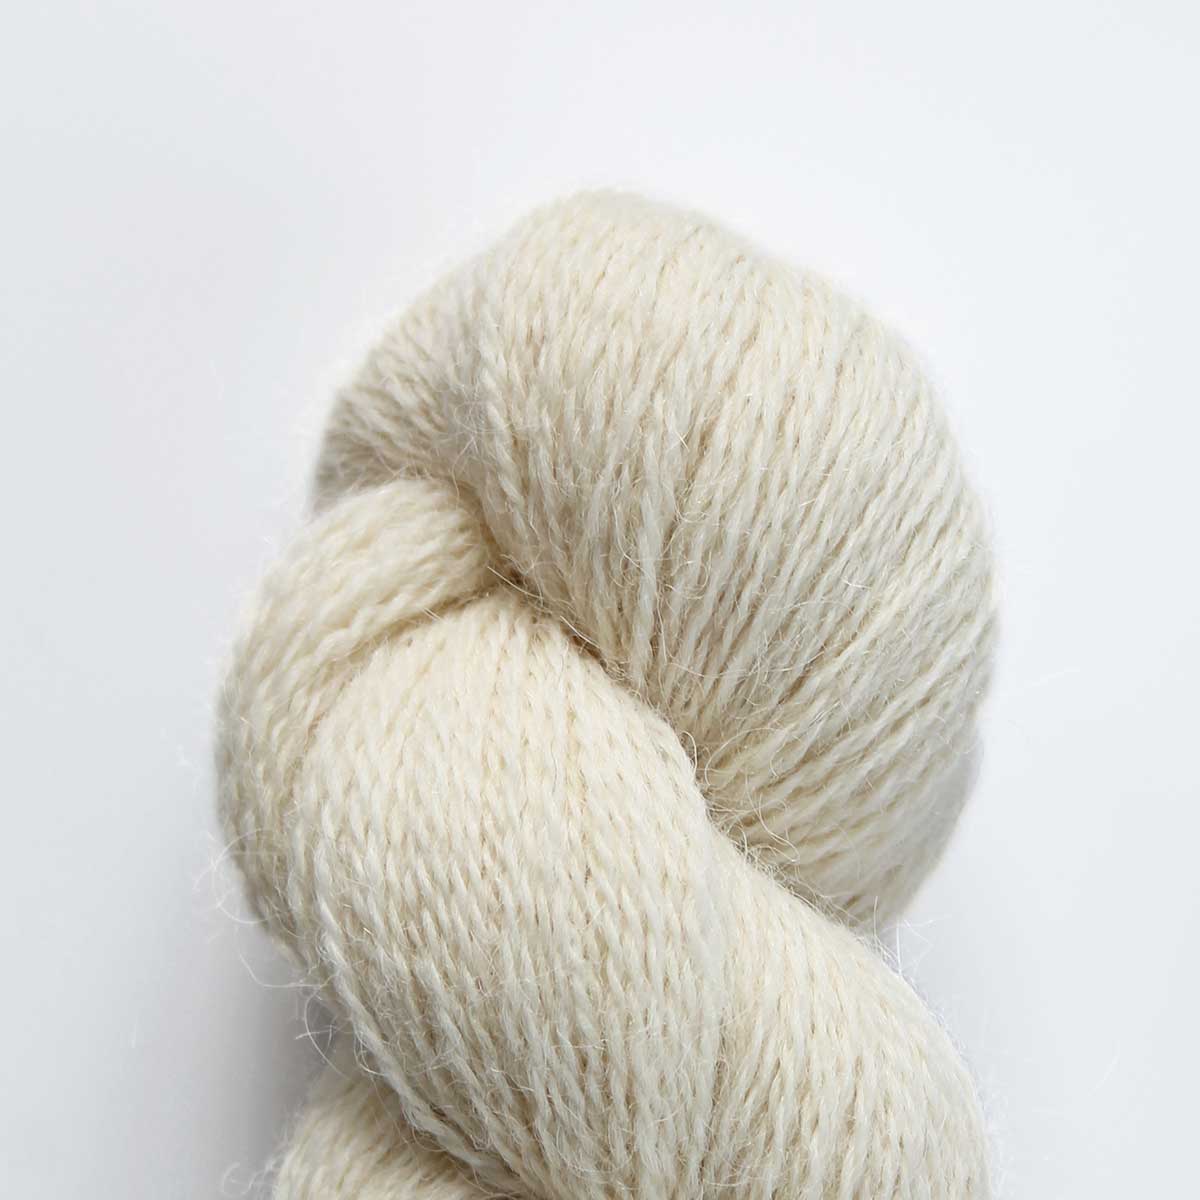 Eden 4Ply: 70% Organic British Hand Knitting Wool, 30% Alpaca 100g Hank